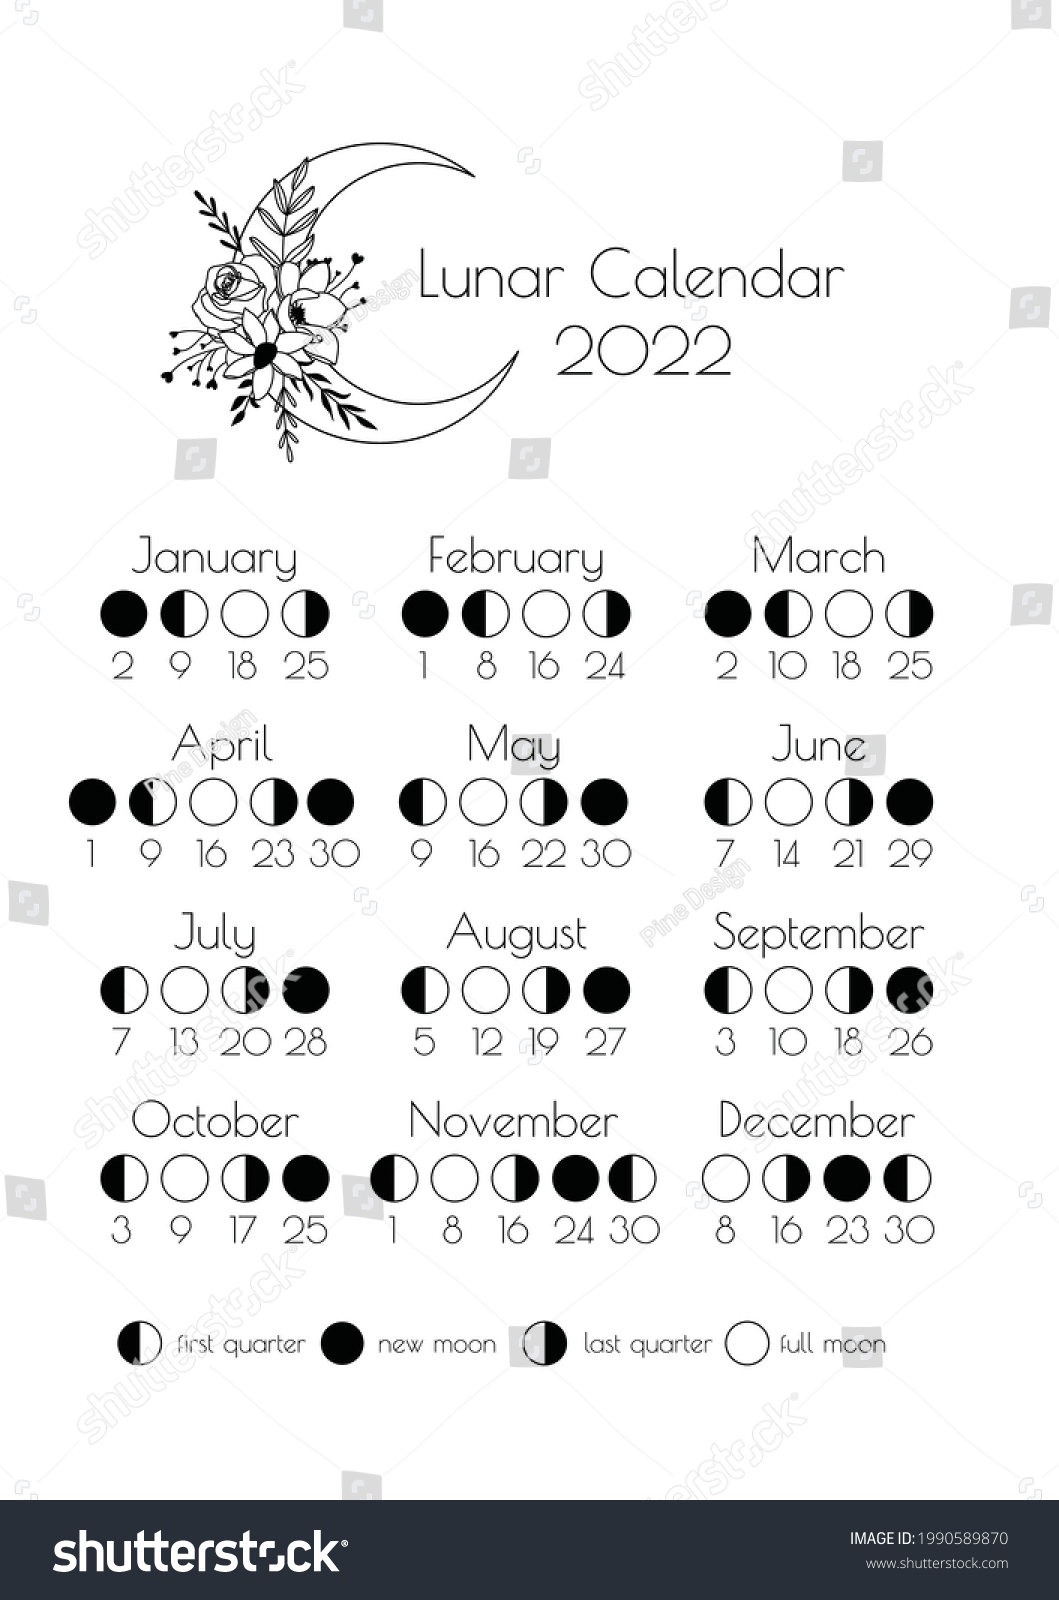 March 2022 Moon Calendar Moon Calendar 2022 Moon Phases 2022 Stock Vector (Royalty Free) 1990589870